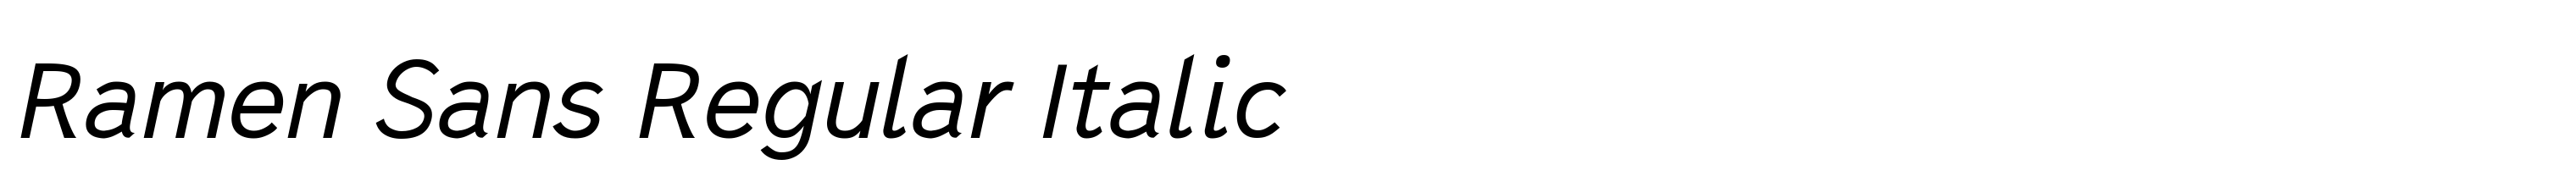 Ramen Sans Regular Italic